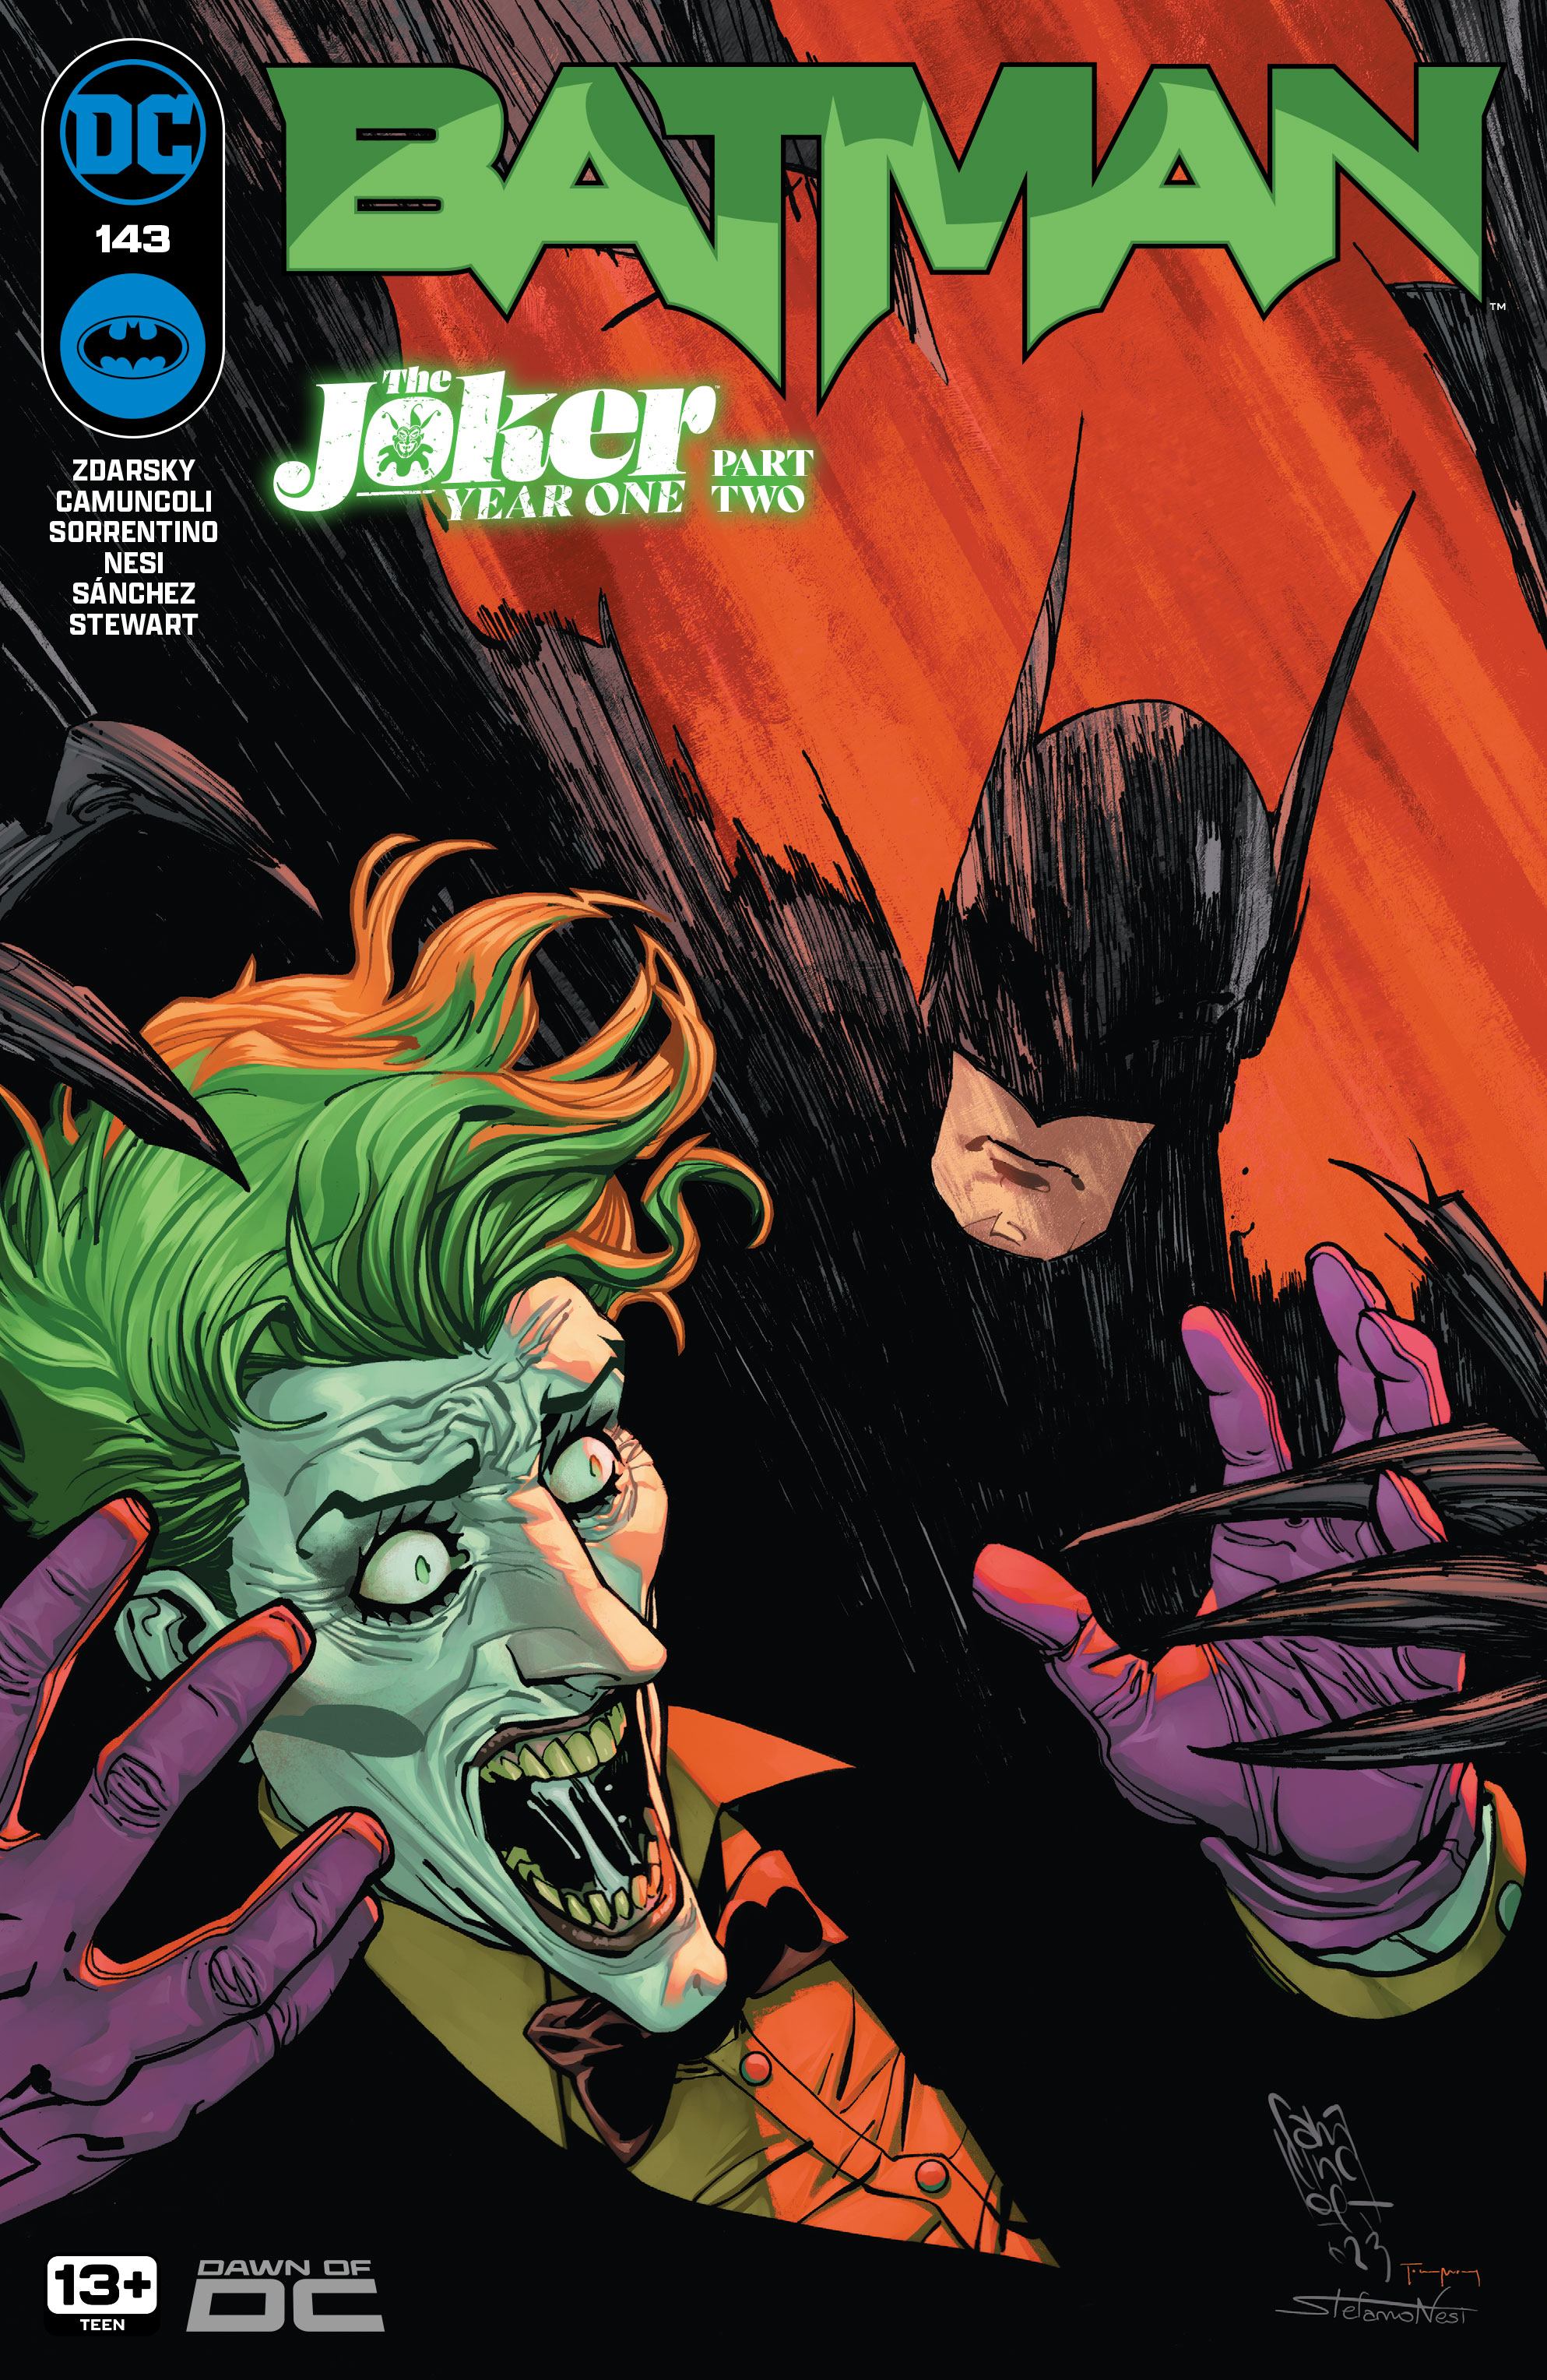 Batman #143 review